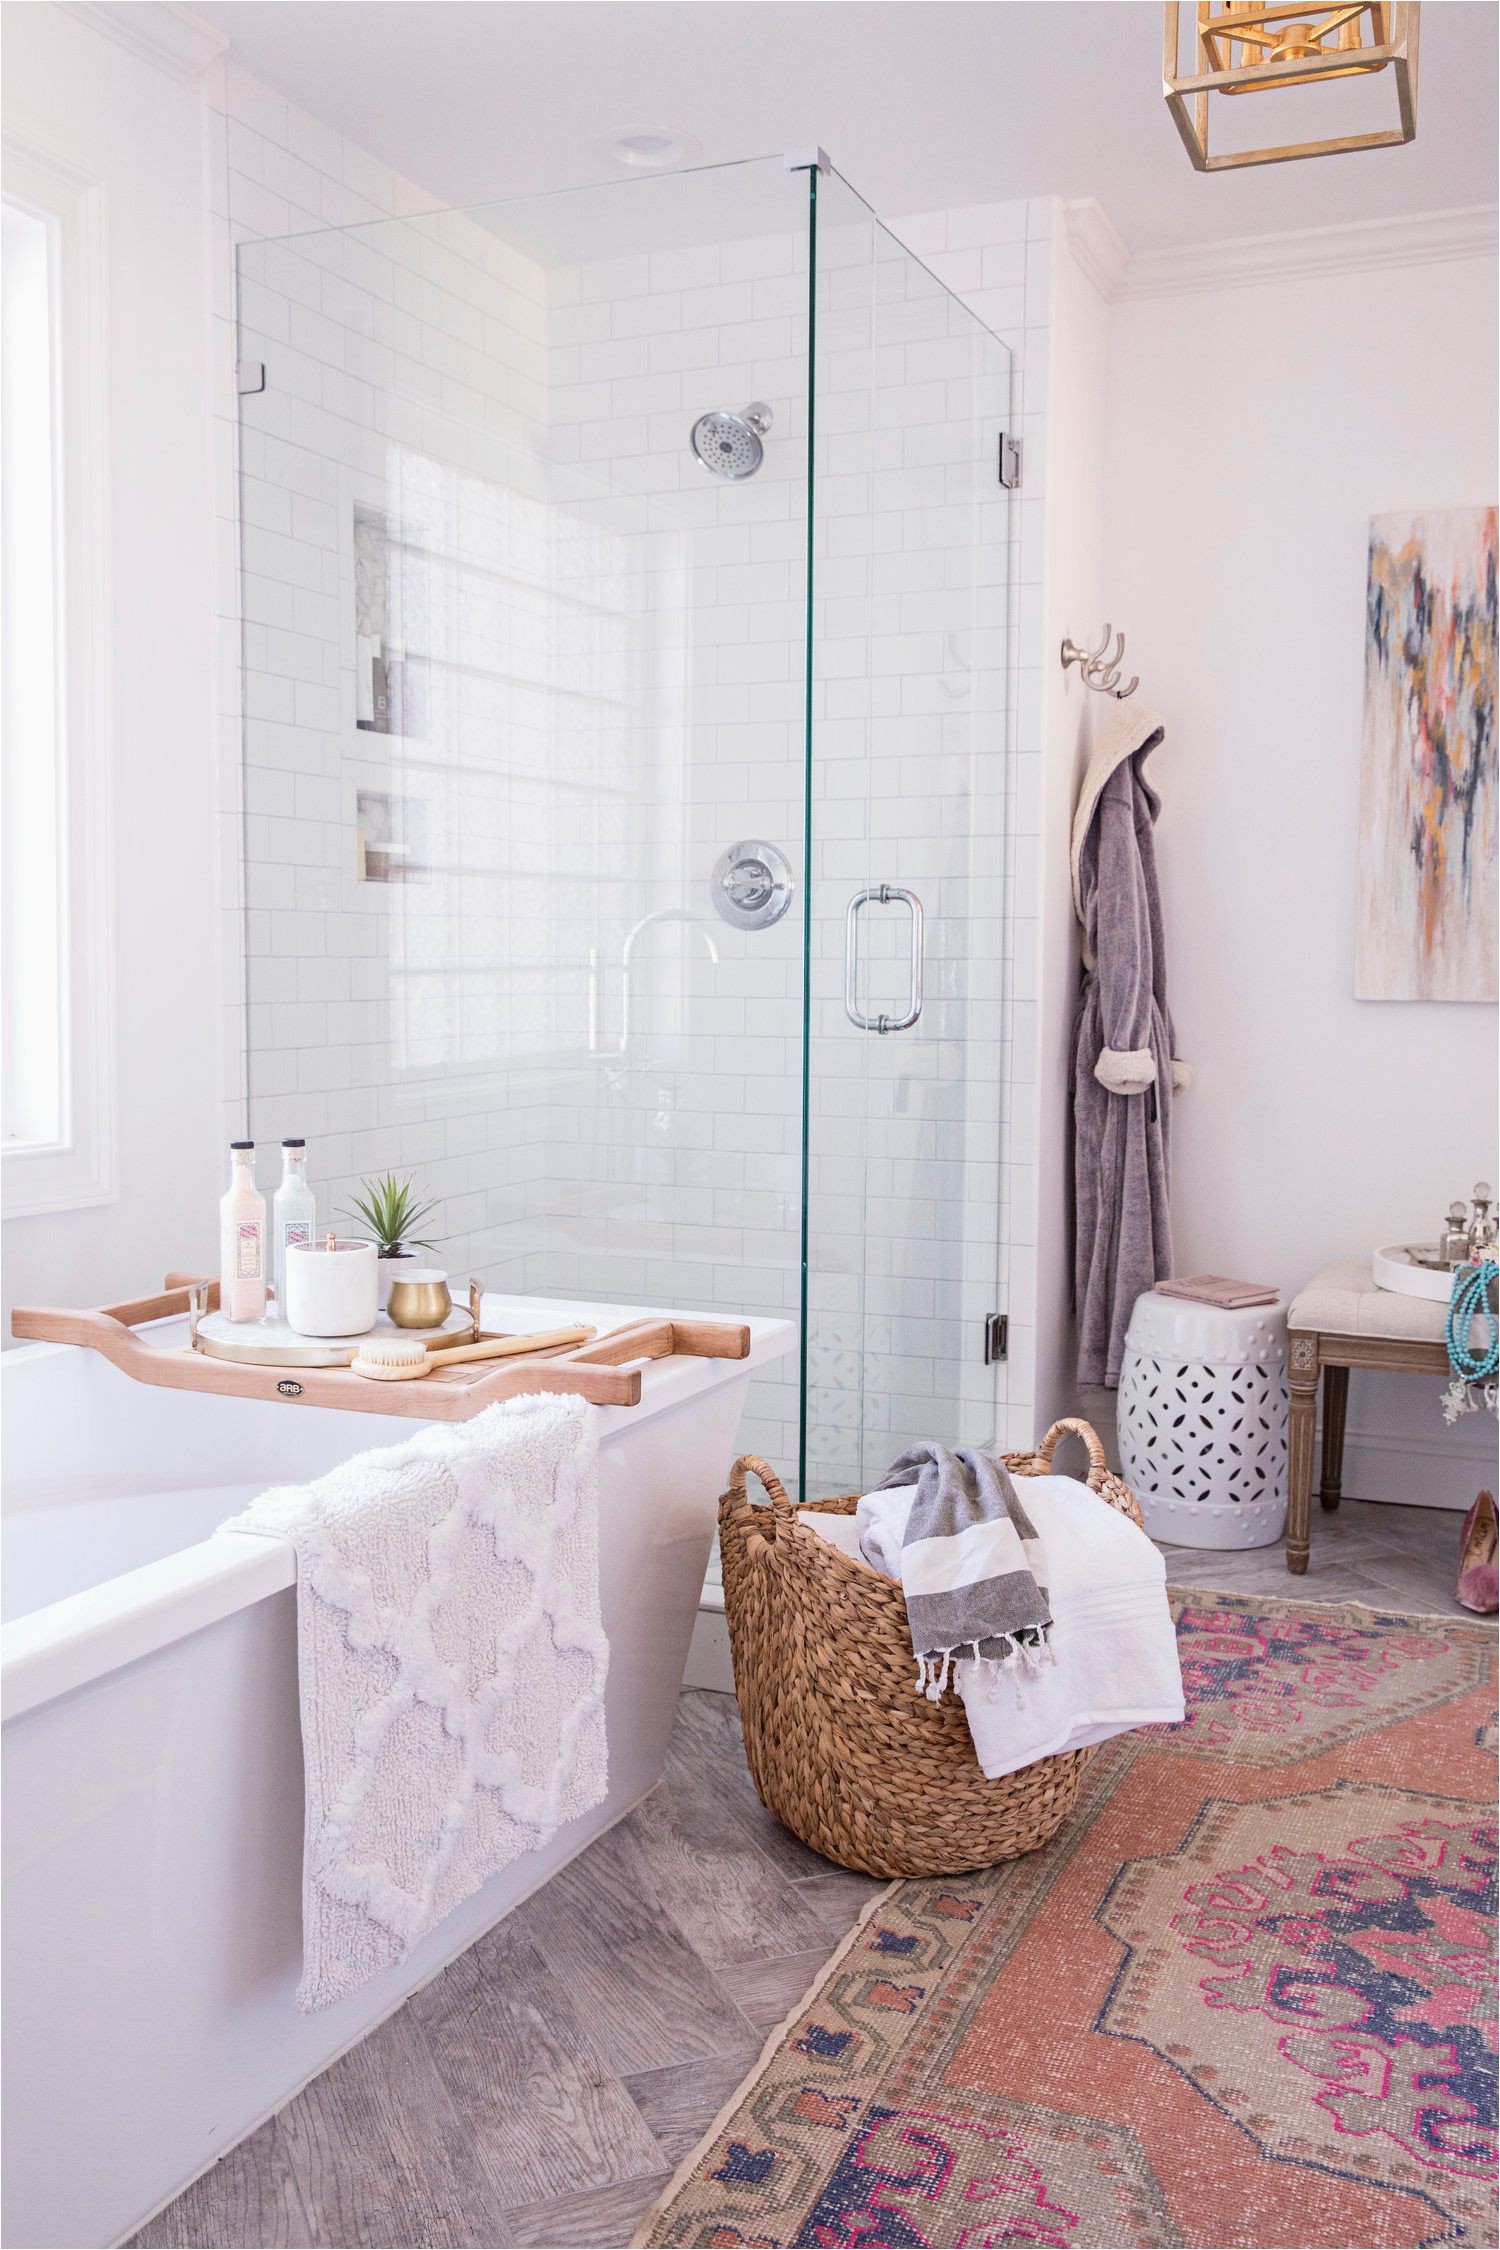 Bath Rugs for Small Bathrooms Bathroom Rug Ideas Bathrooms Rugs Home Decor Designs